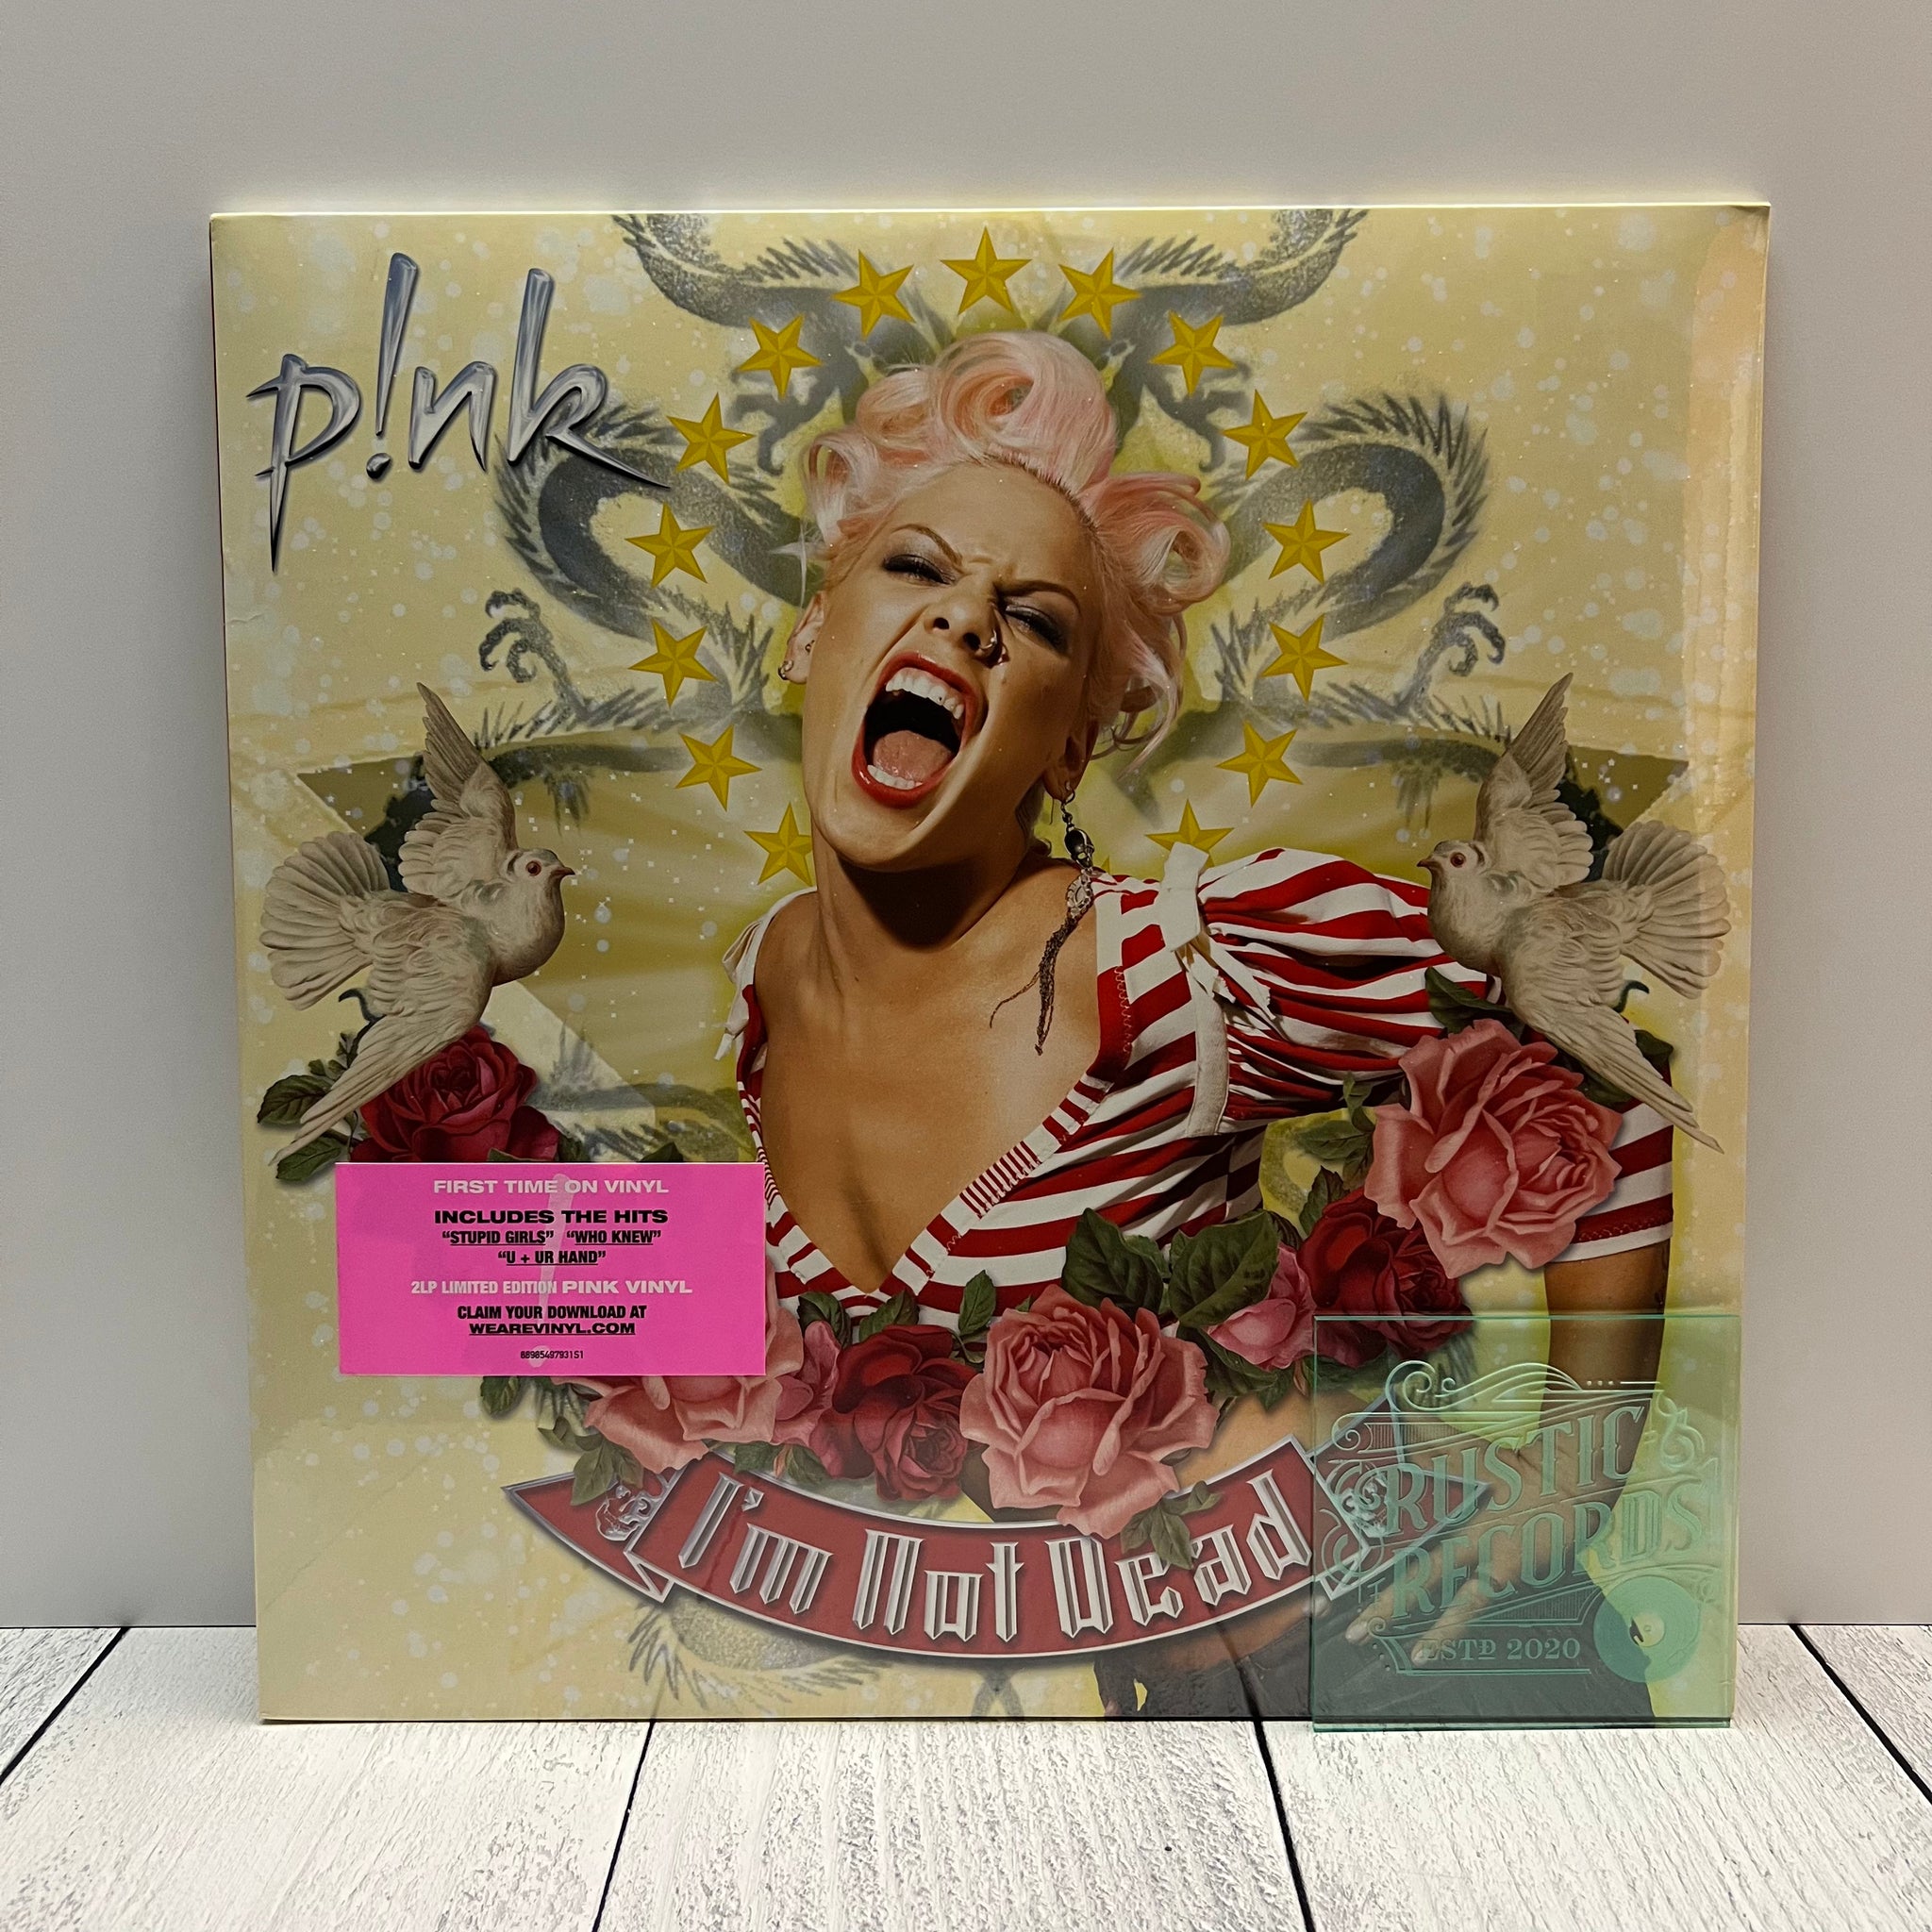 Pink - I'm Not Dead (Pink Vinyl)